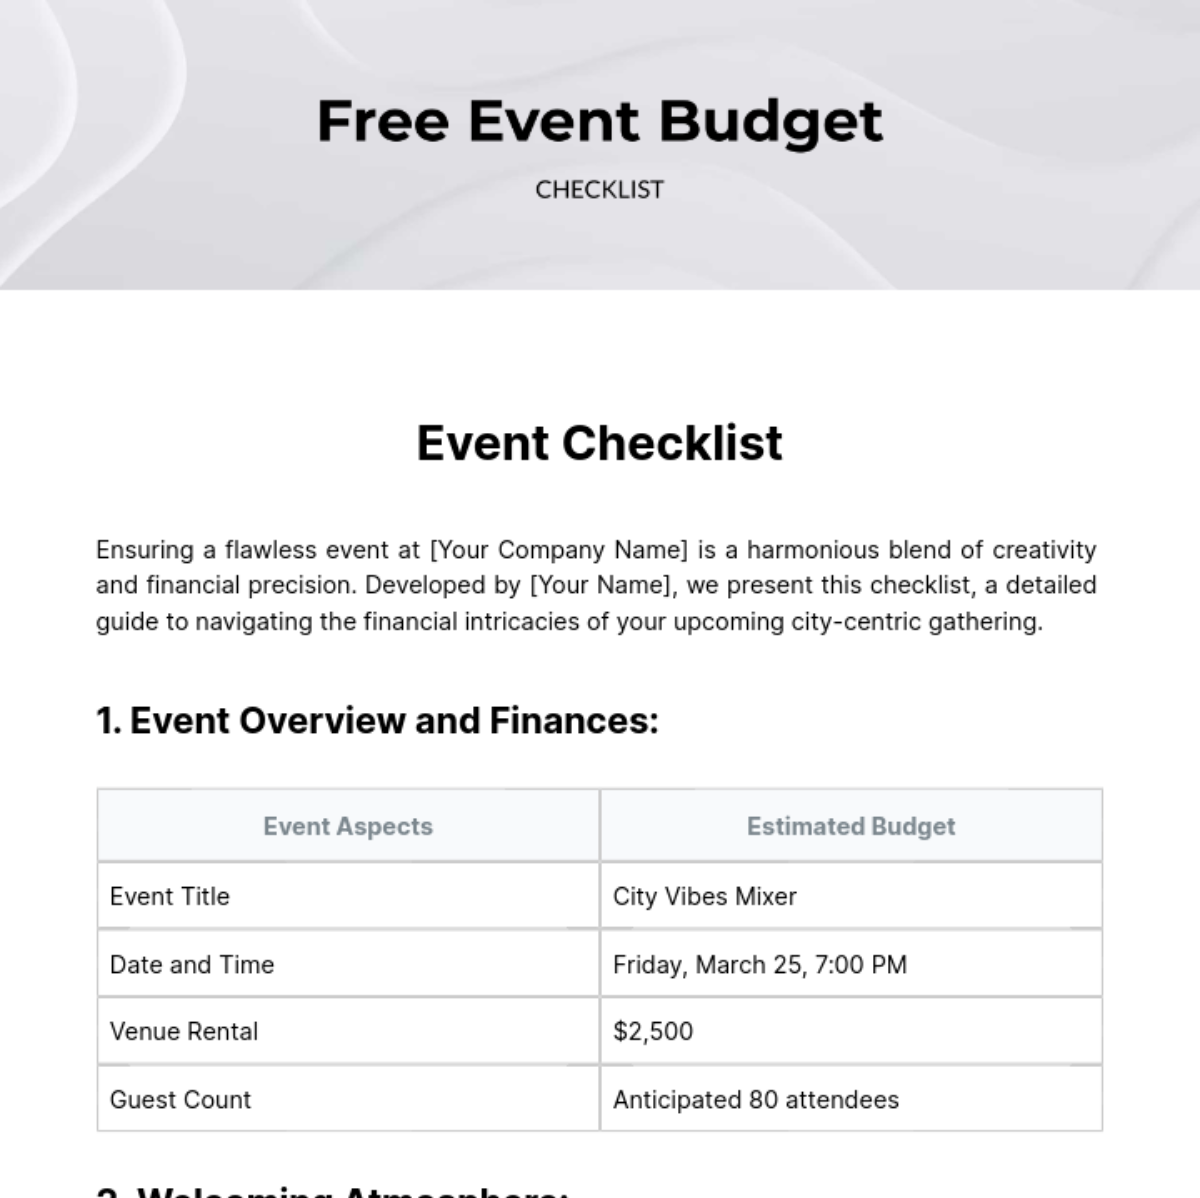 Free Event Budget Checklist Template